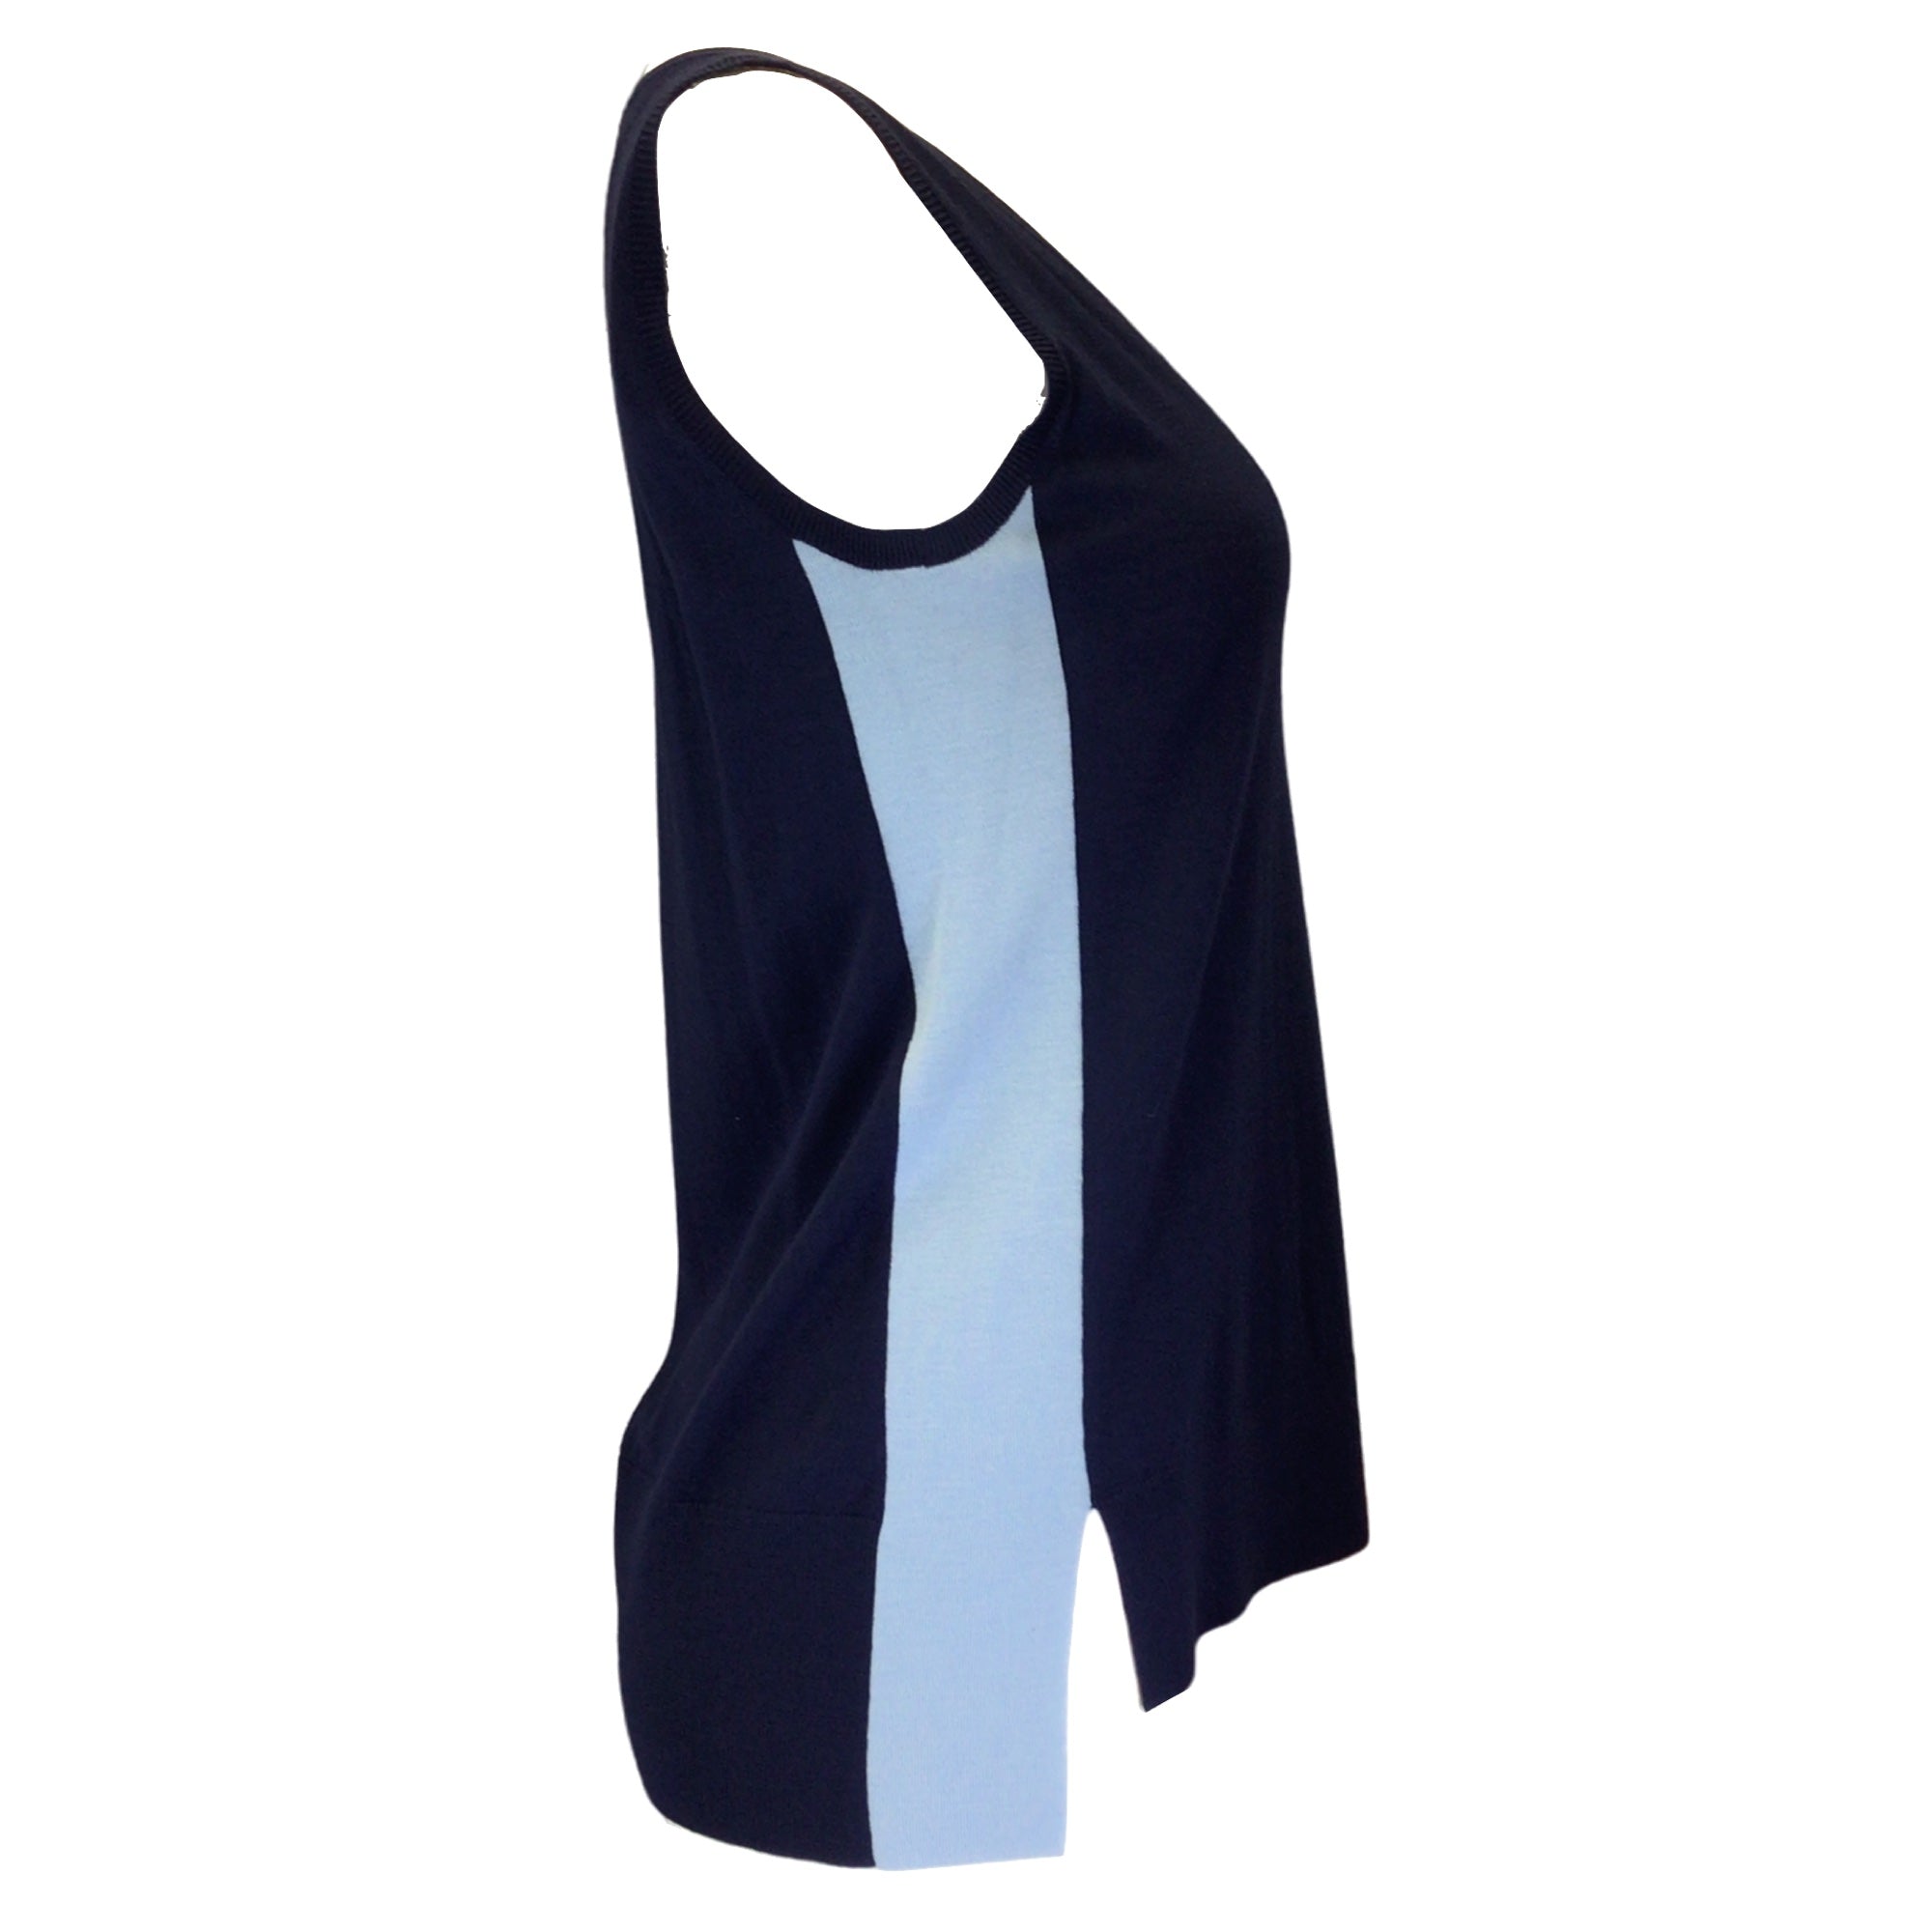 Akris Punto Navy Blue / Light Blue Wool Knit Cardigan Sweater and Tank Top Two-Piece Set